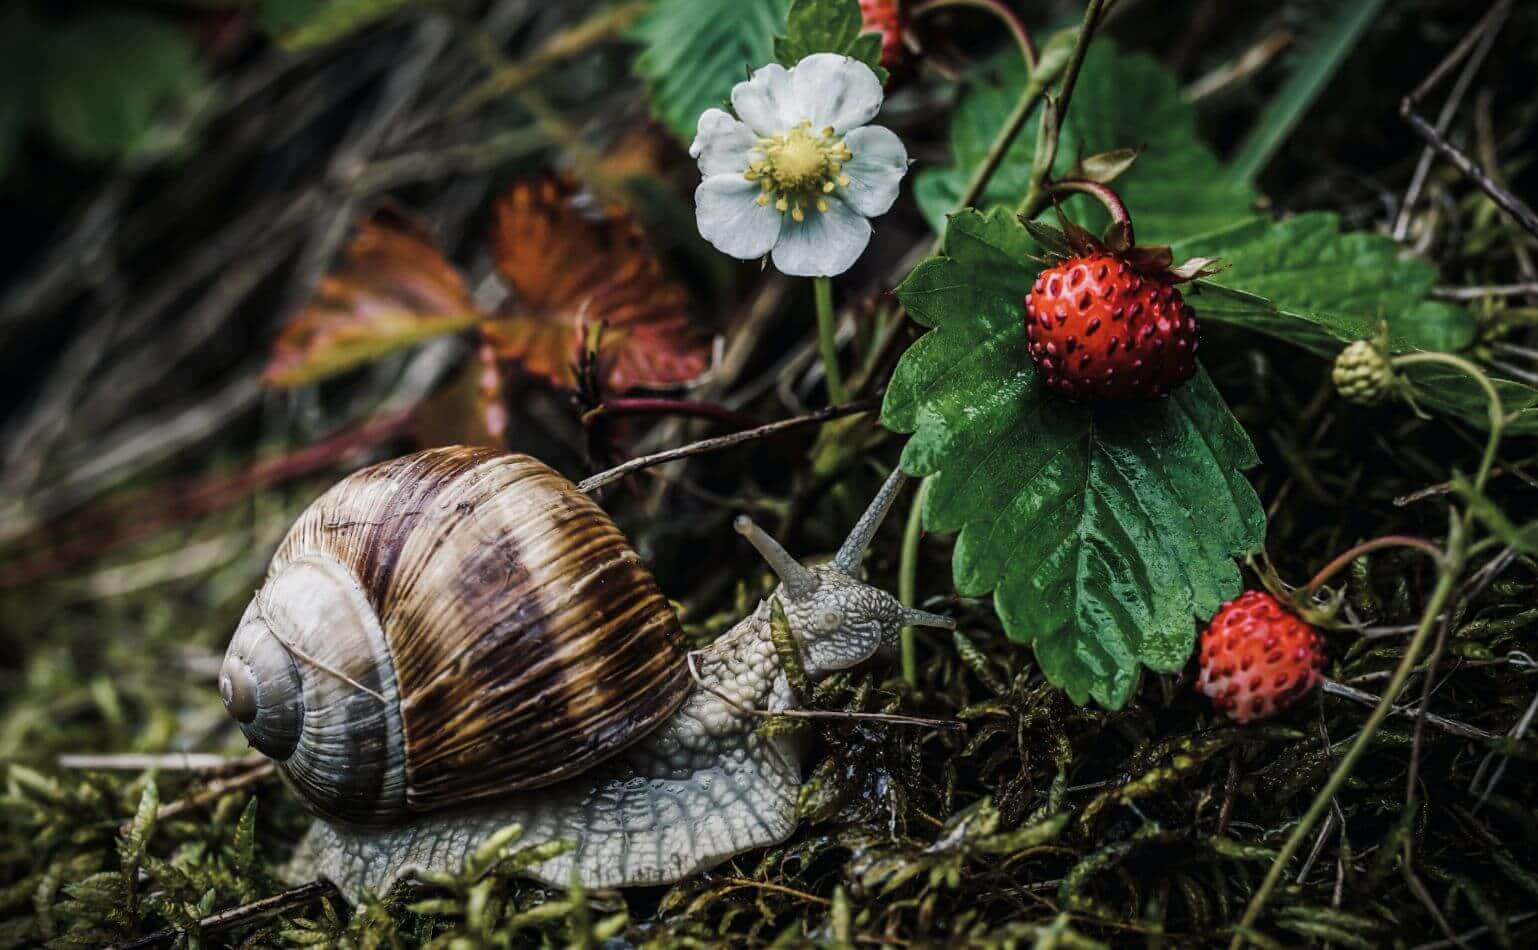 A slow but steady snail